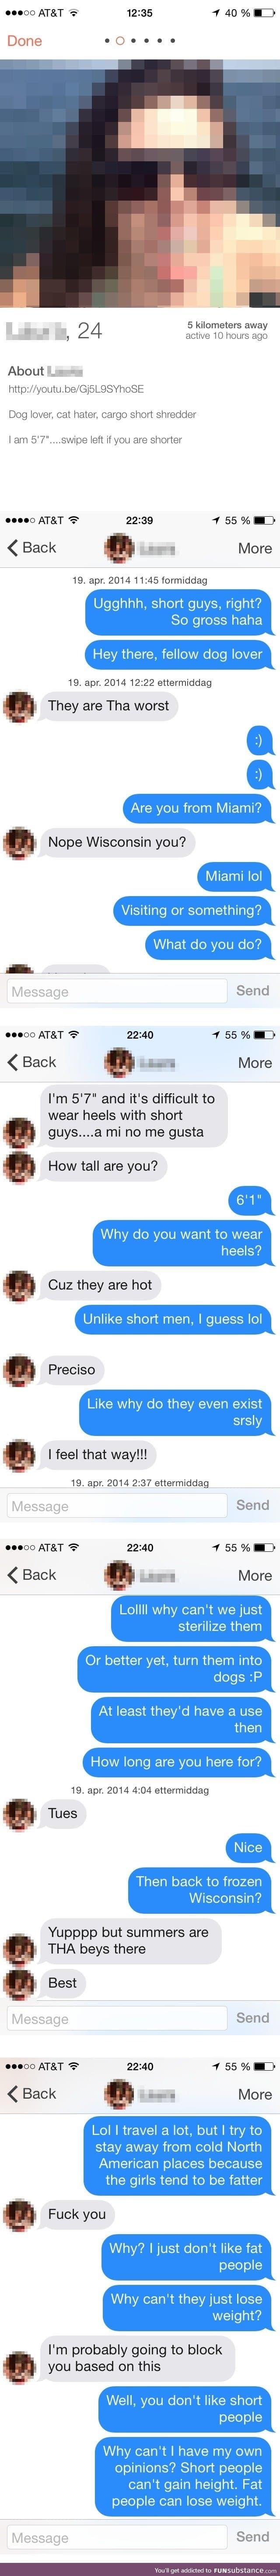 Girls hate short guys